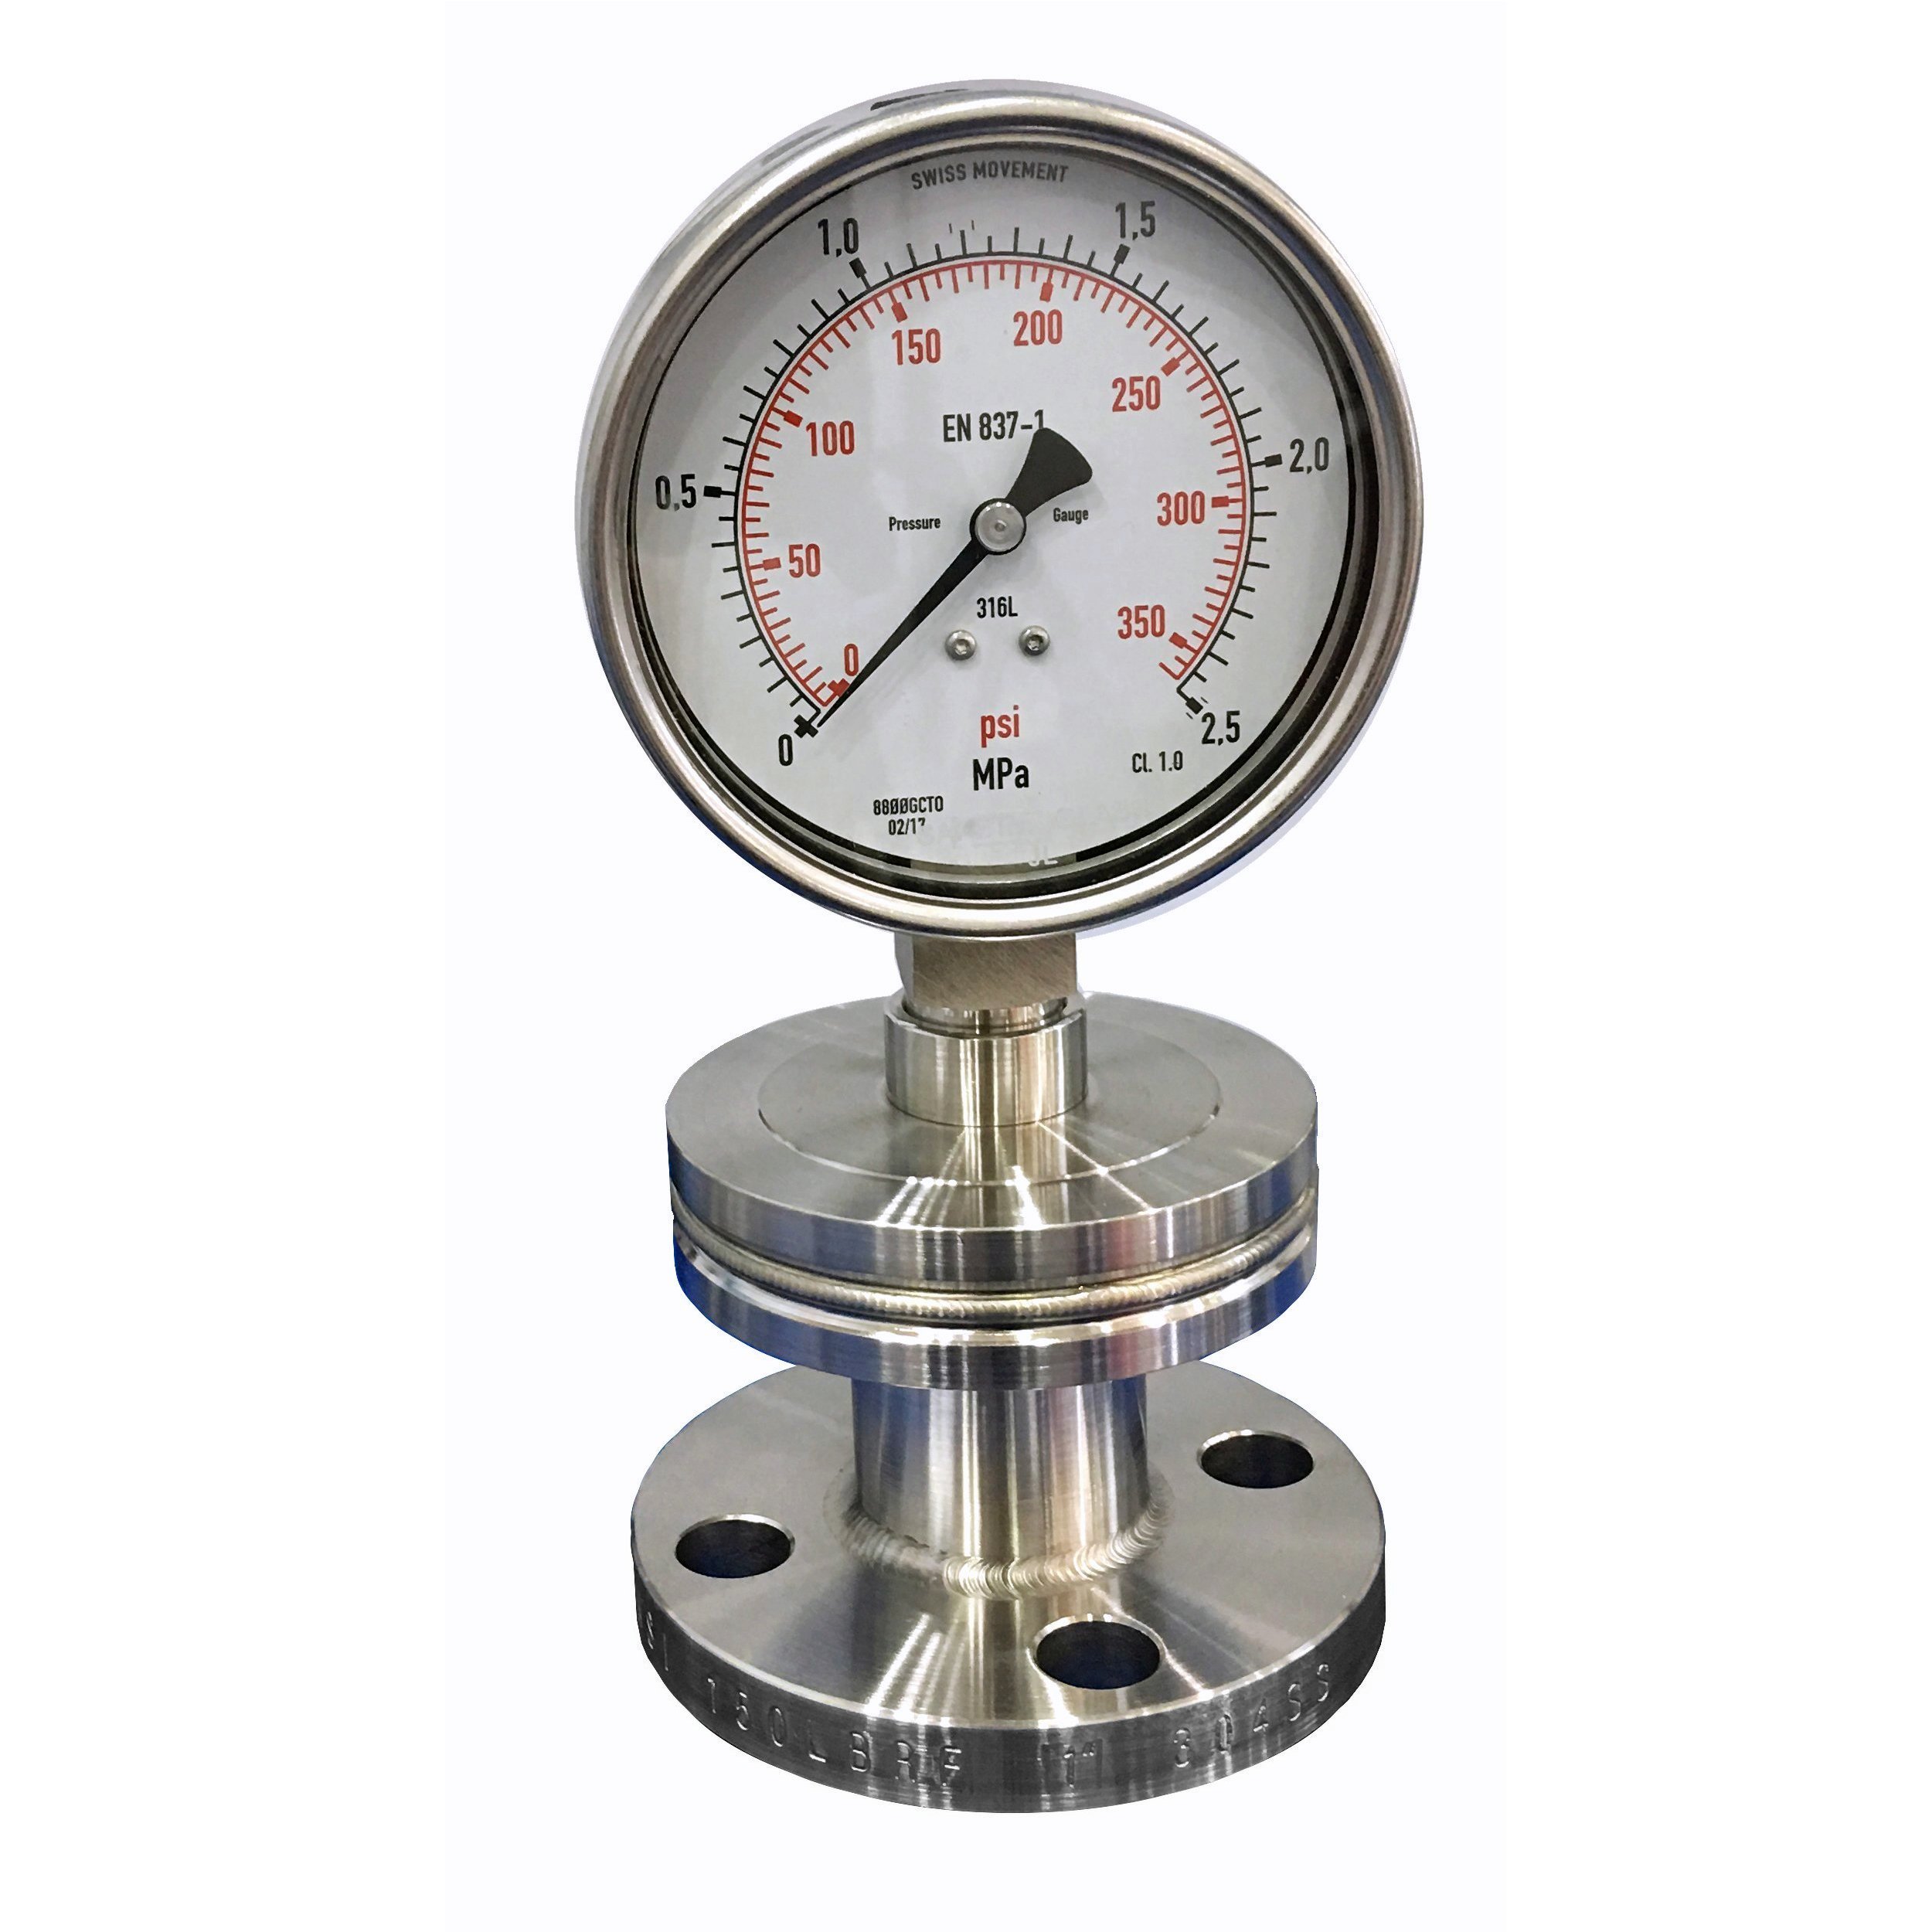 Diaphragm seal pressure gauge (double flanged)